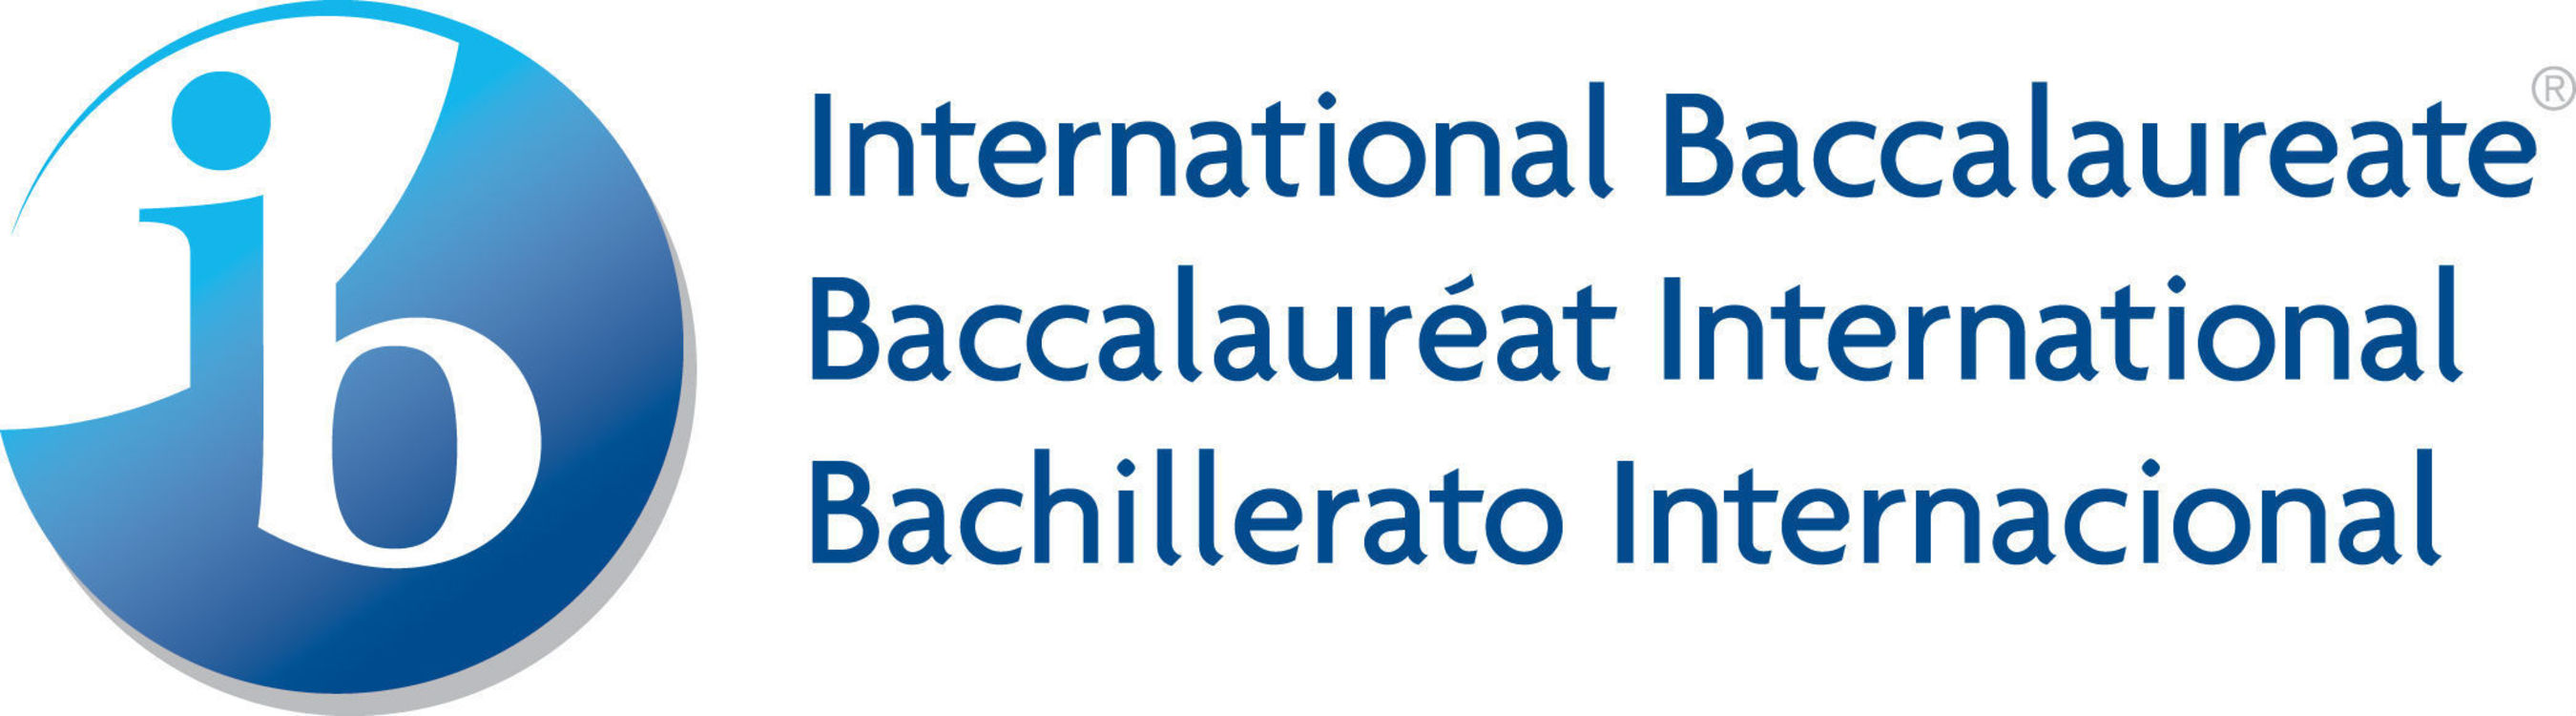 International Baccalaureate Logo (PRNewsFoto/The International Baccalaureate)